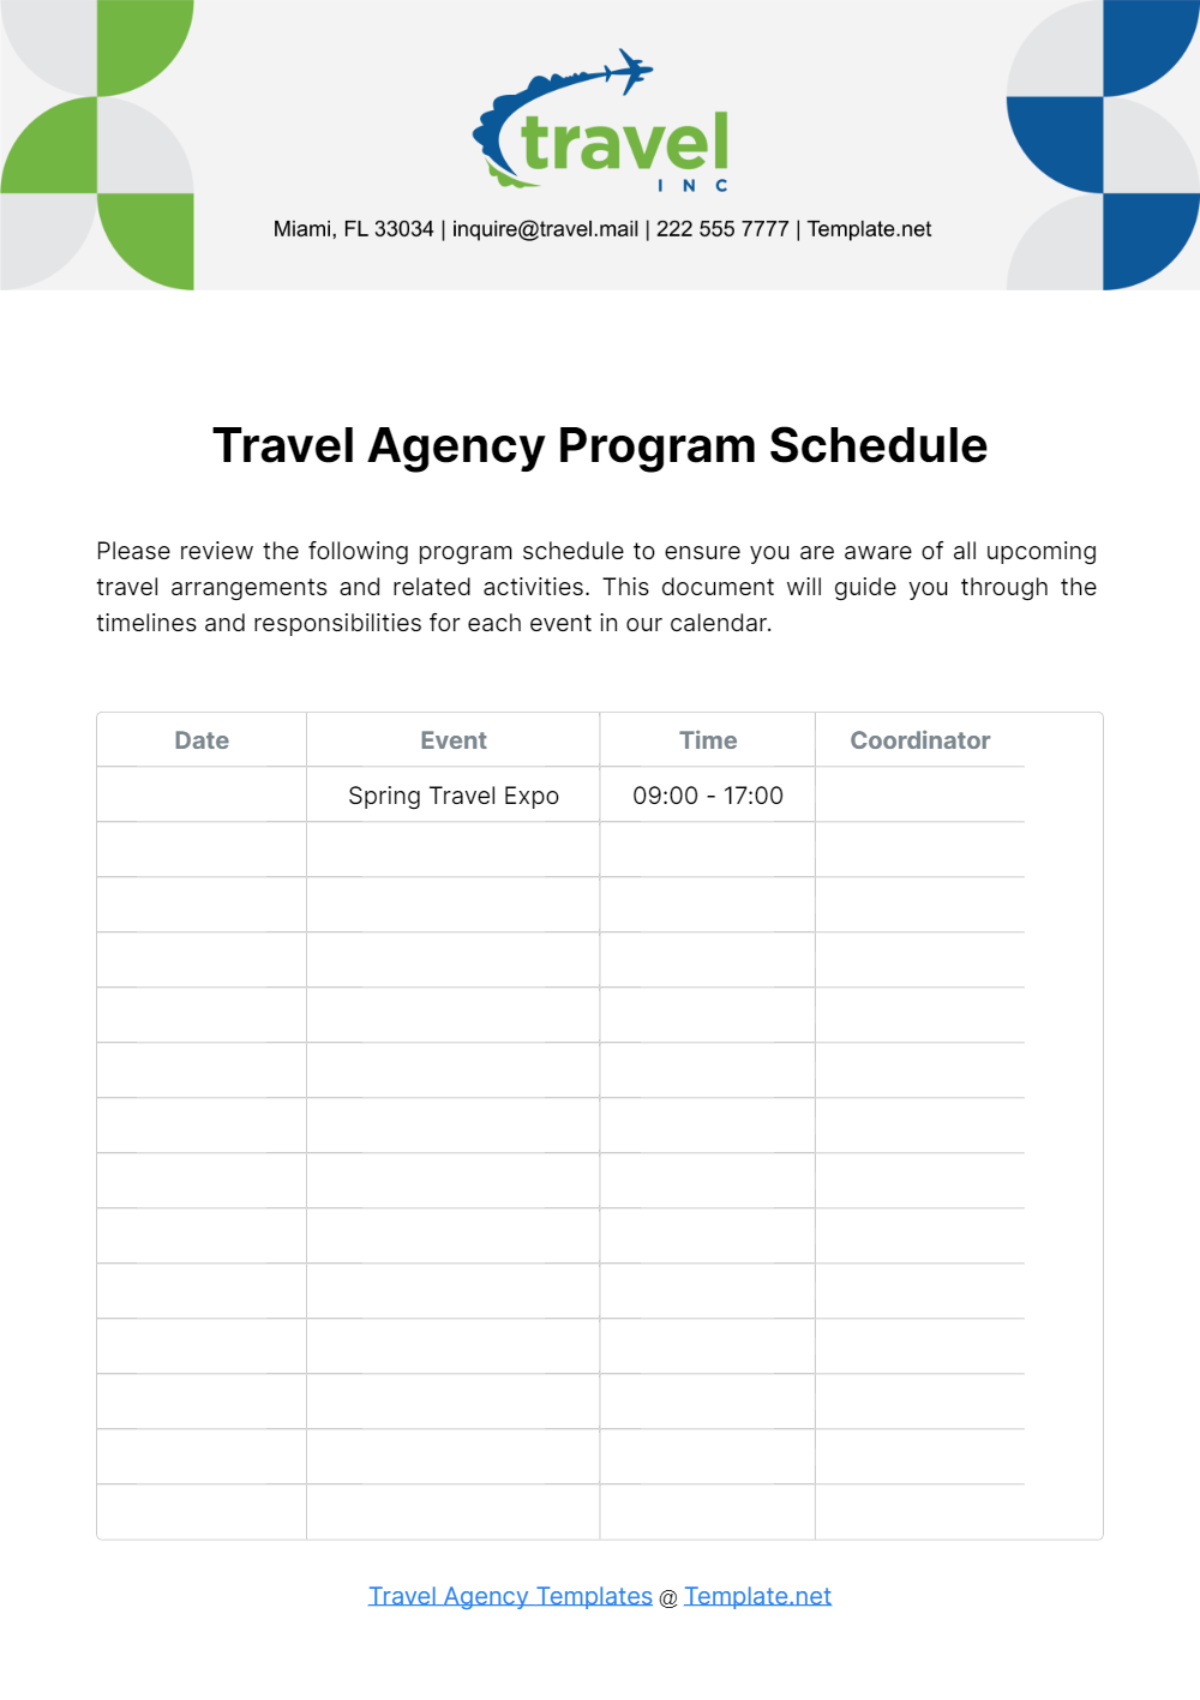 Travel Agency Program Schedule Template